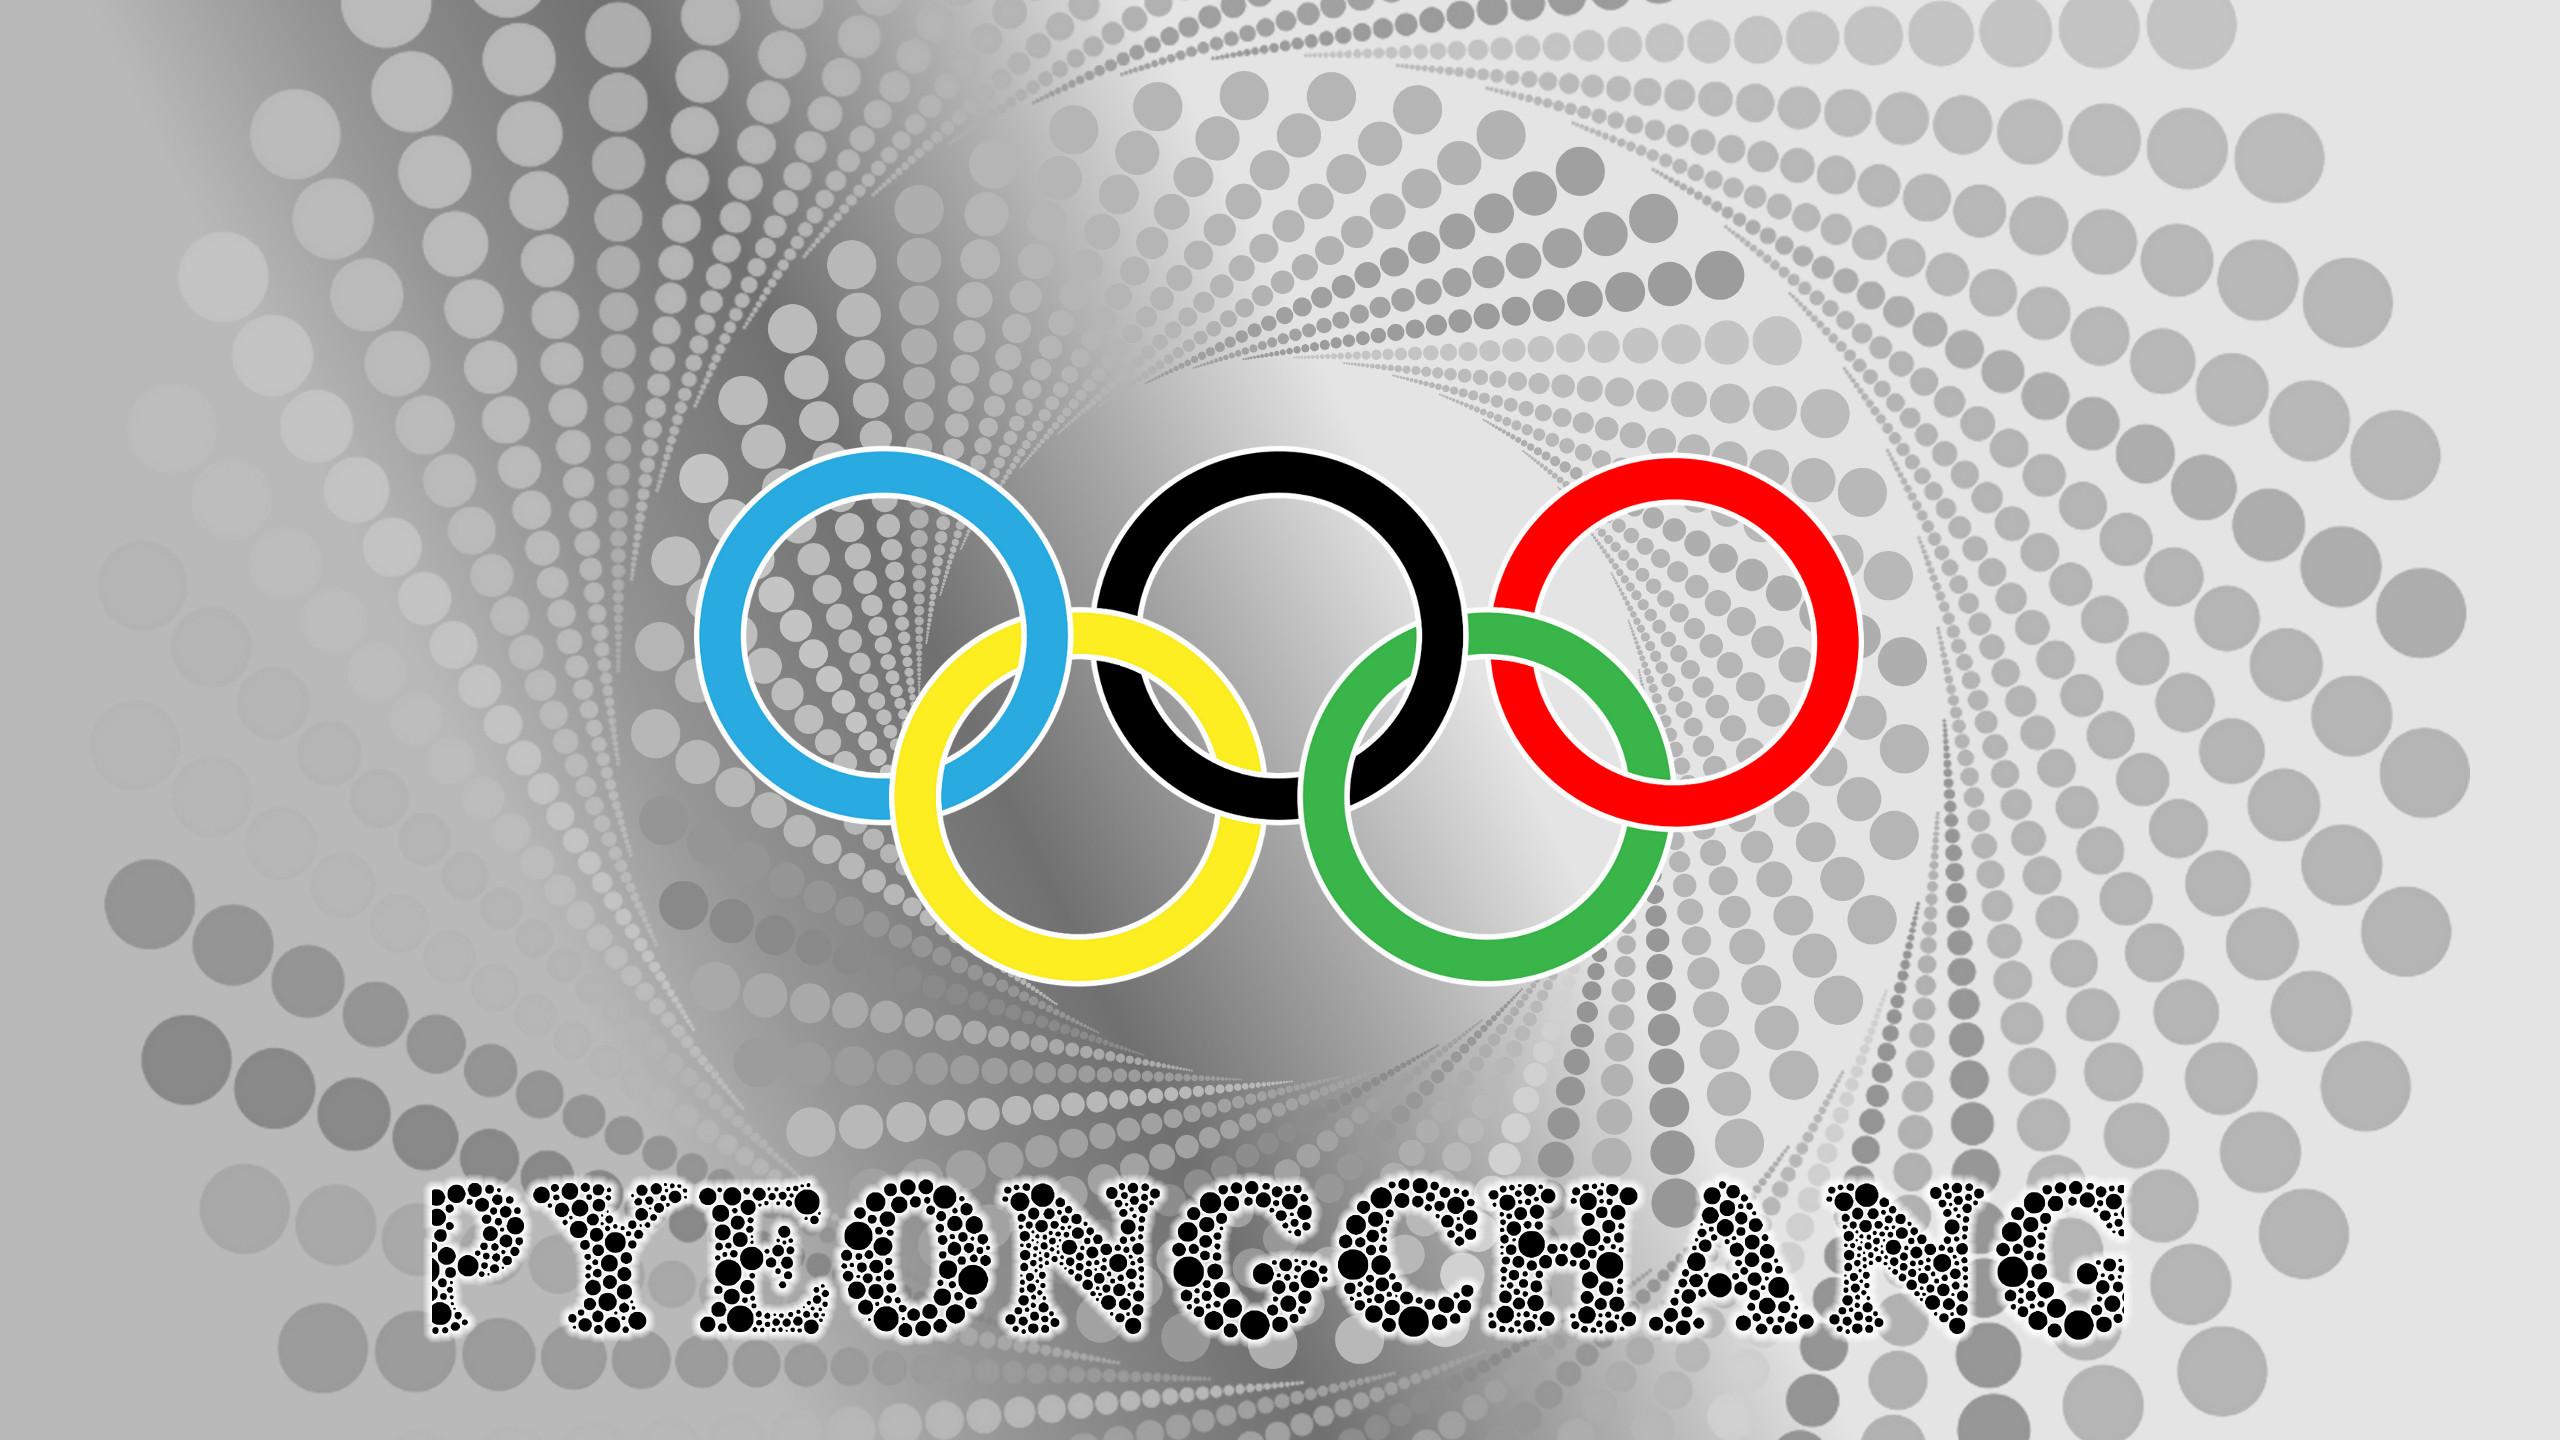 Pyeongchang 2018 Olympic Wintergames HD Wallpaper